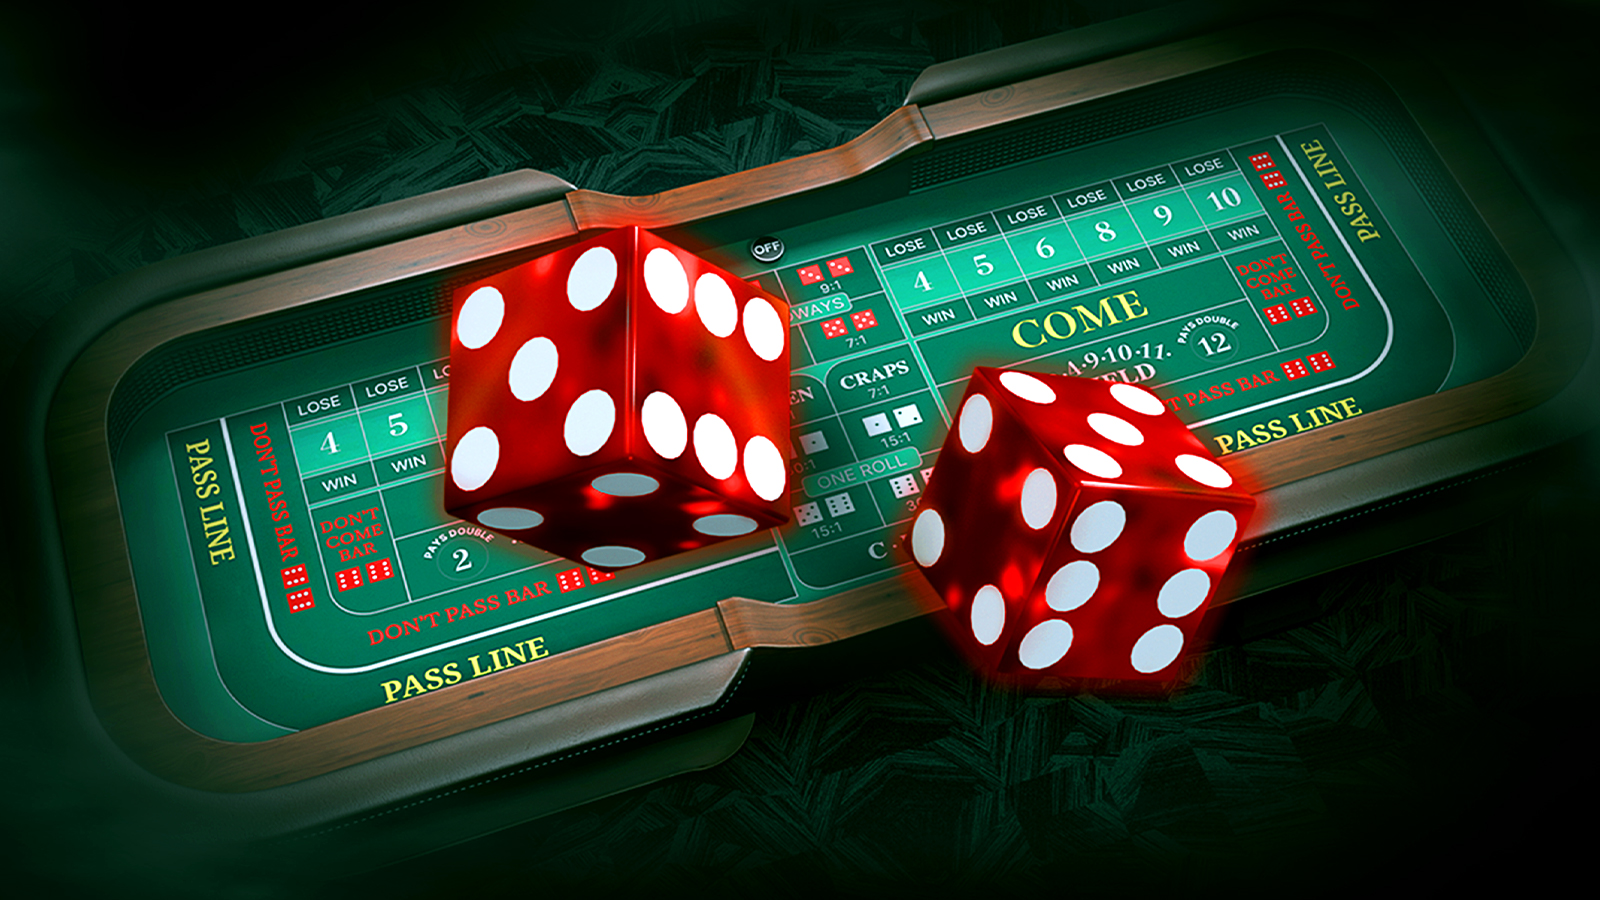 Rizk casino sign up bonuses